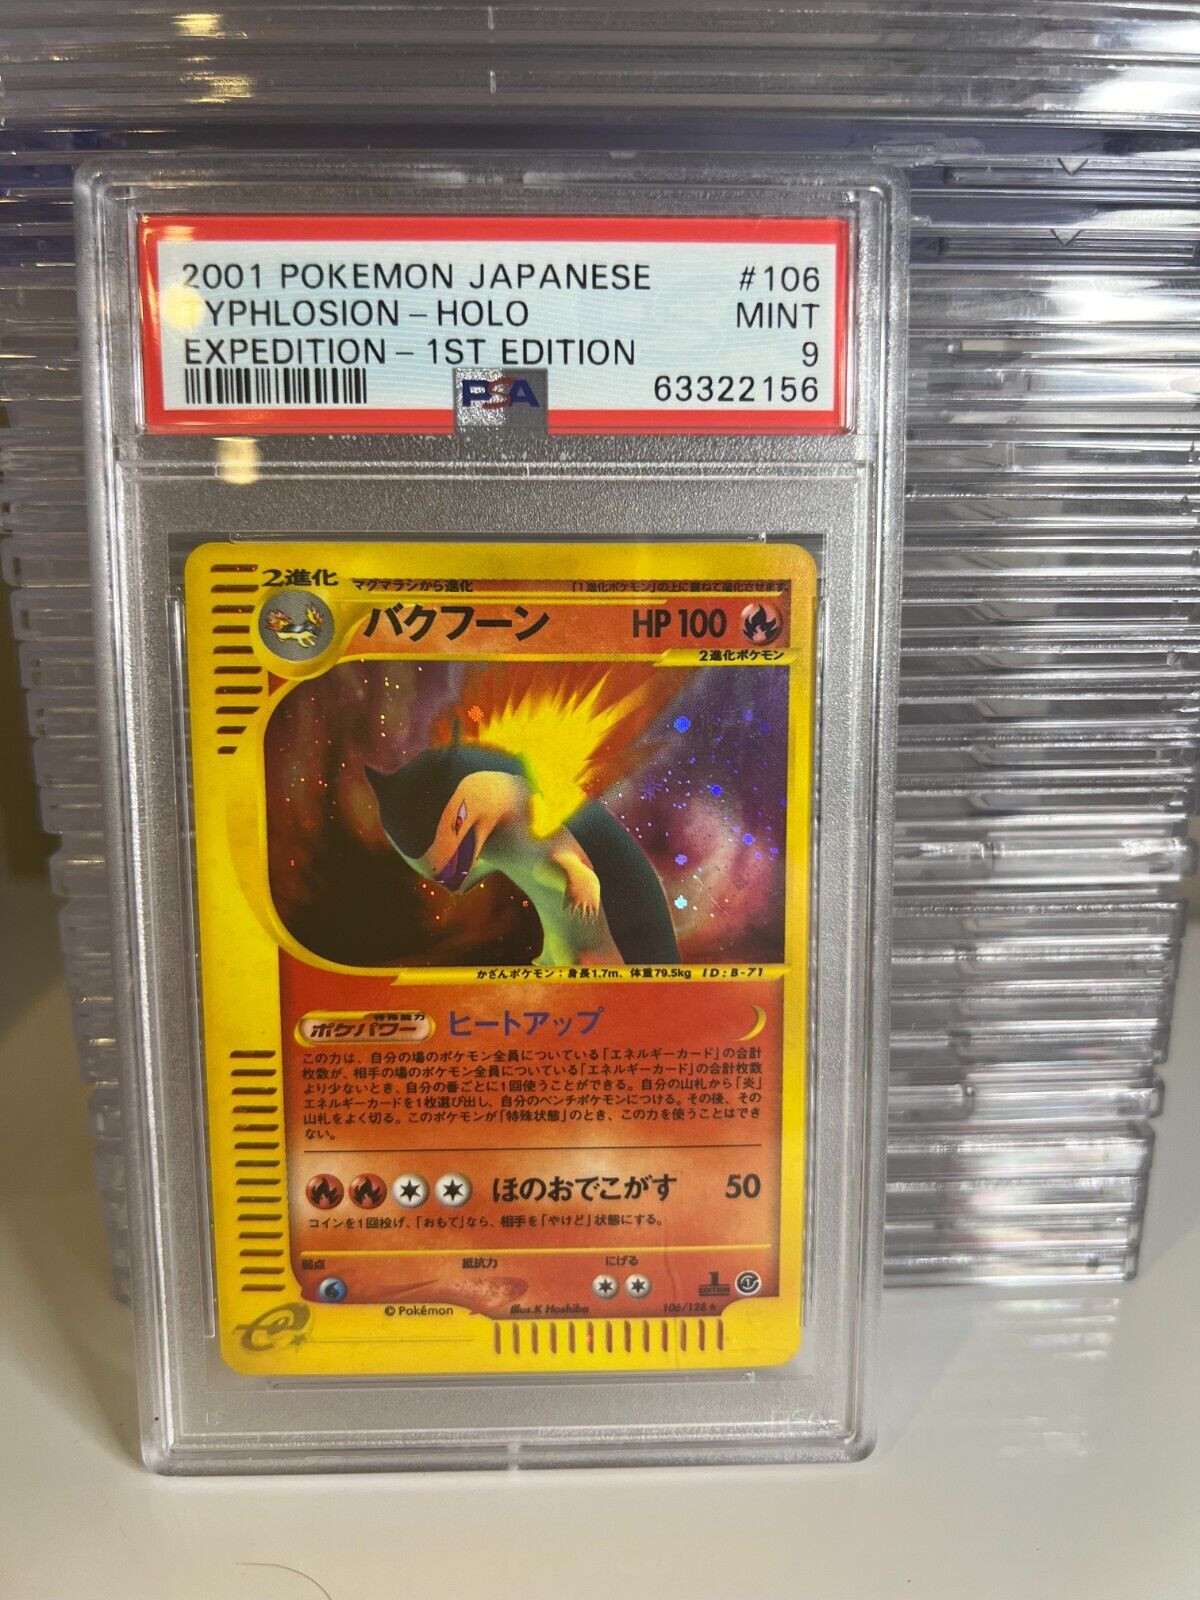 2001 Pokemon Japanese Expedition 1st Edition Holo Typhlosion #106 PSA 9